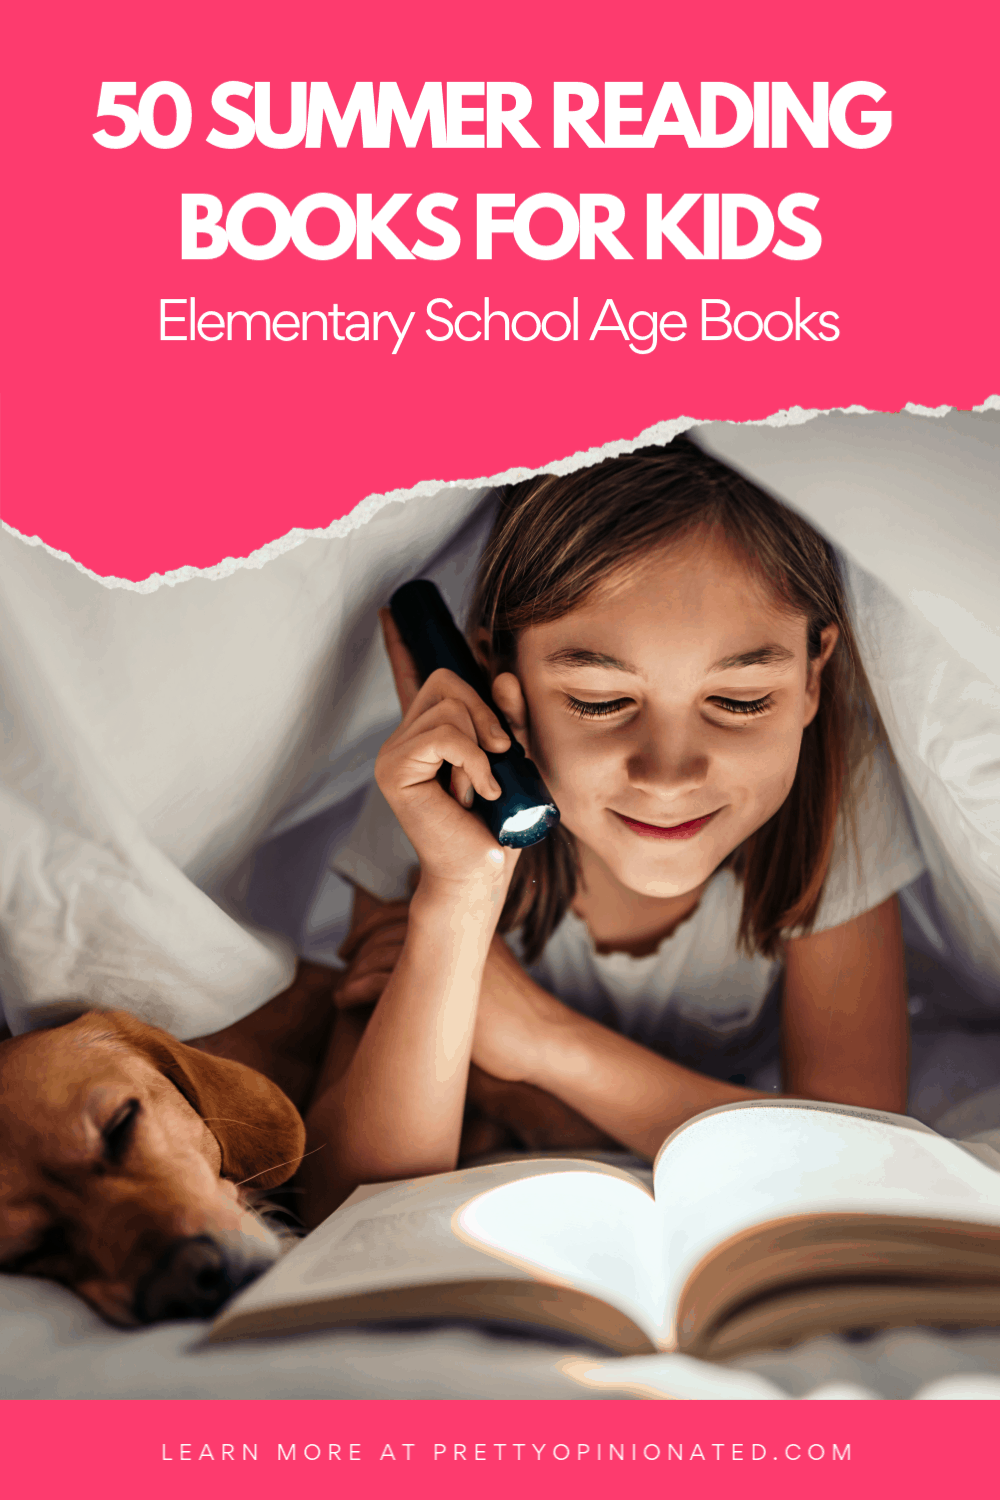 50 Summer Reading Books for Kids in Elementary School